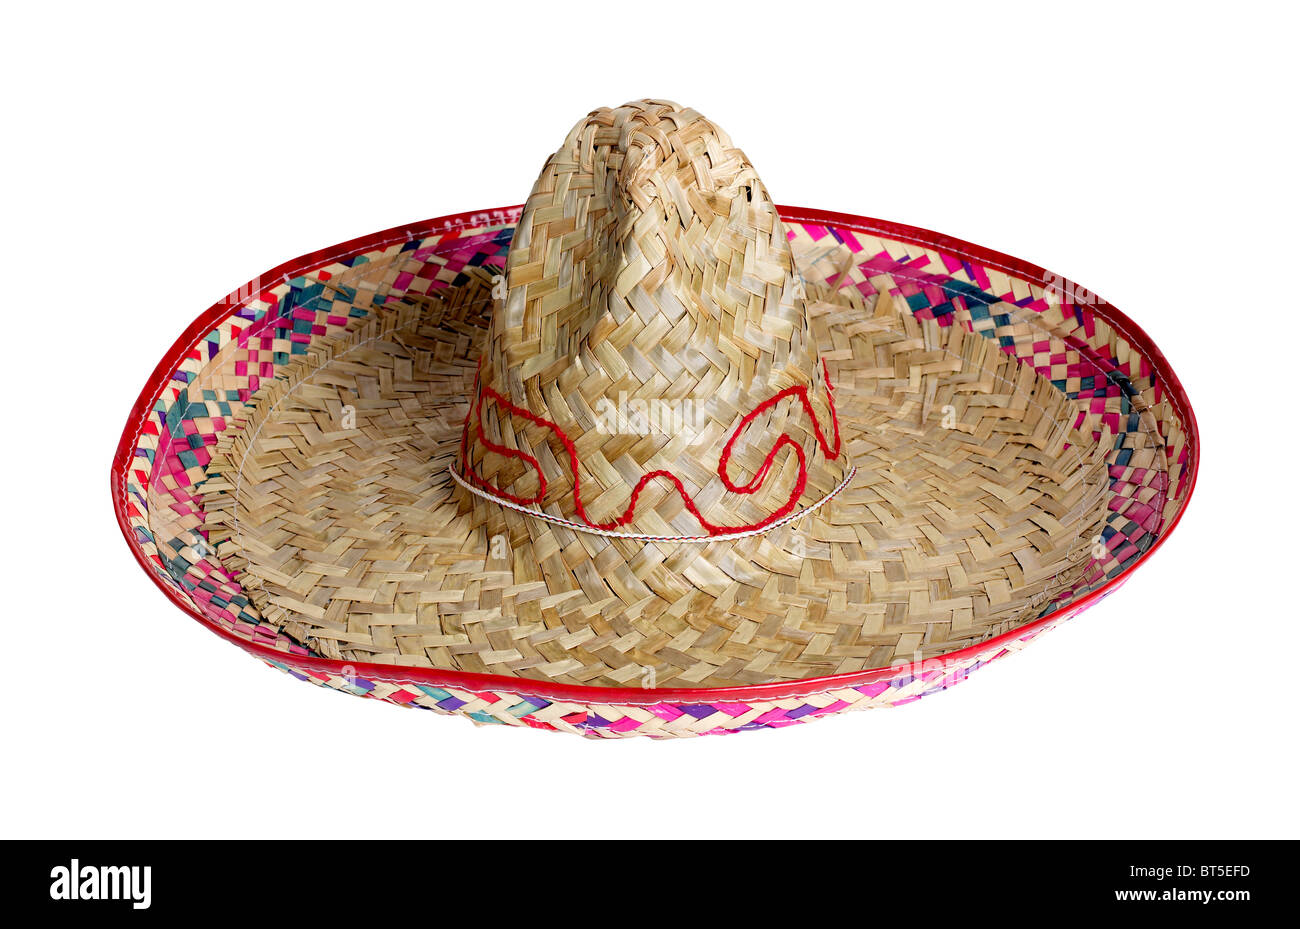 Sombrero Mexico Mexican straw hat shade head cover sun protection dance celebrate celebration accessory Stock Photo